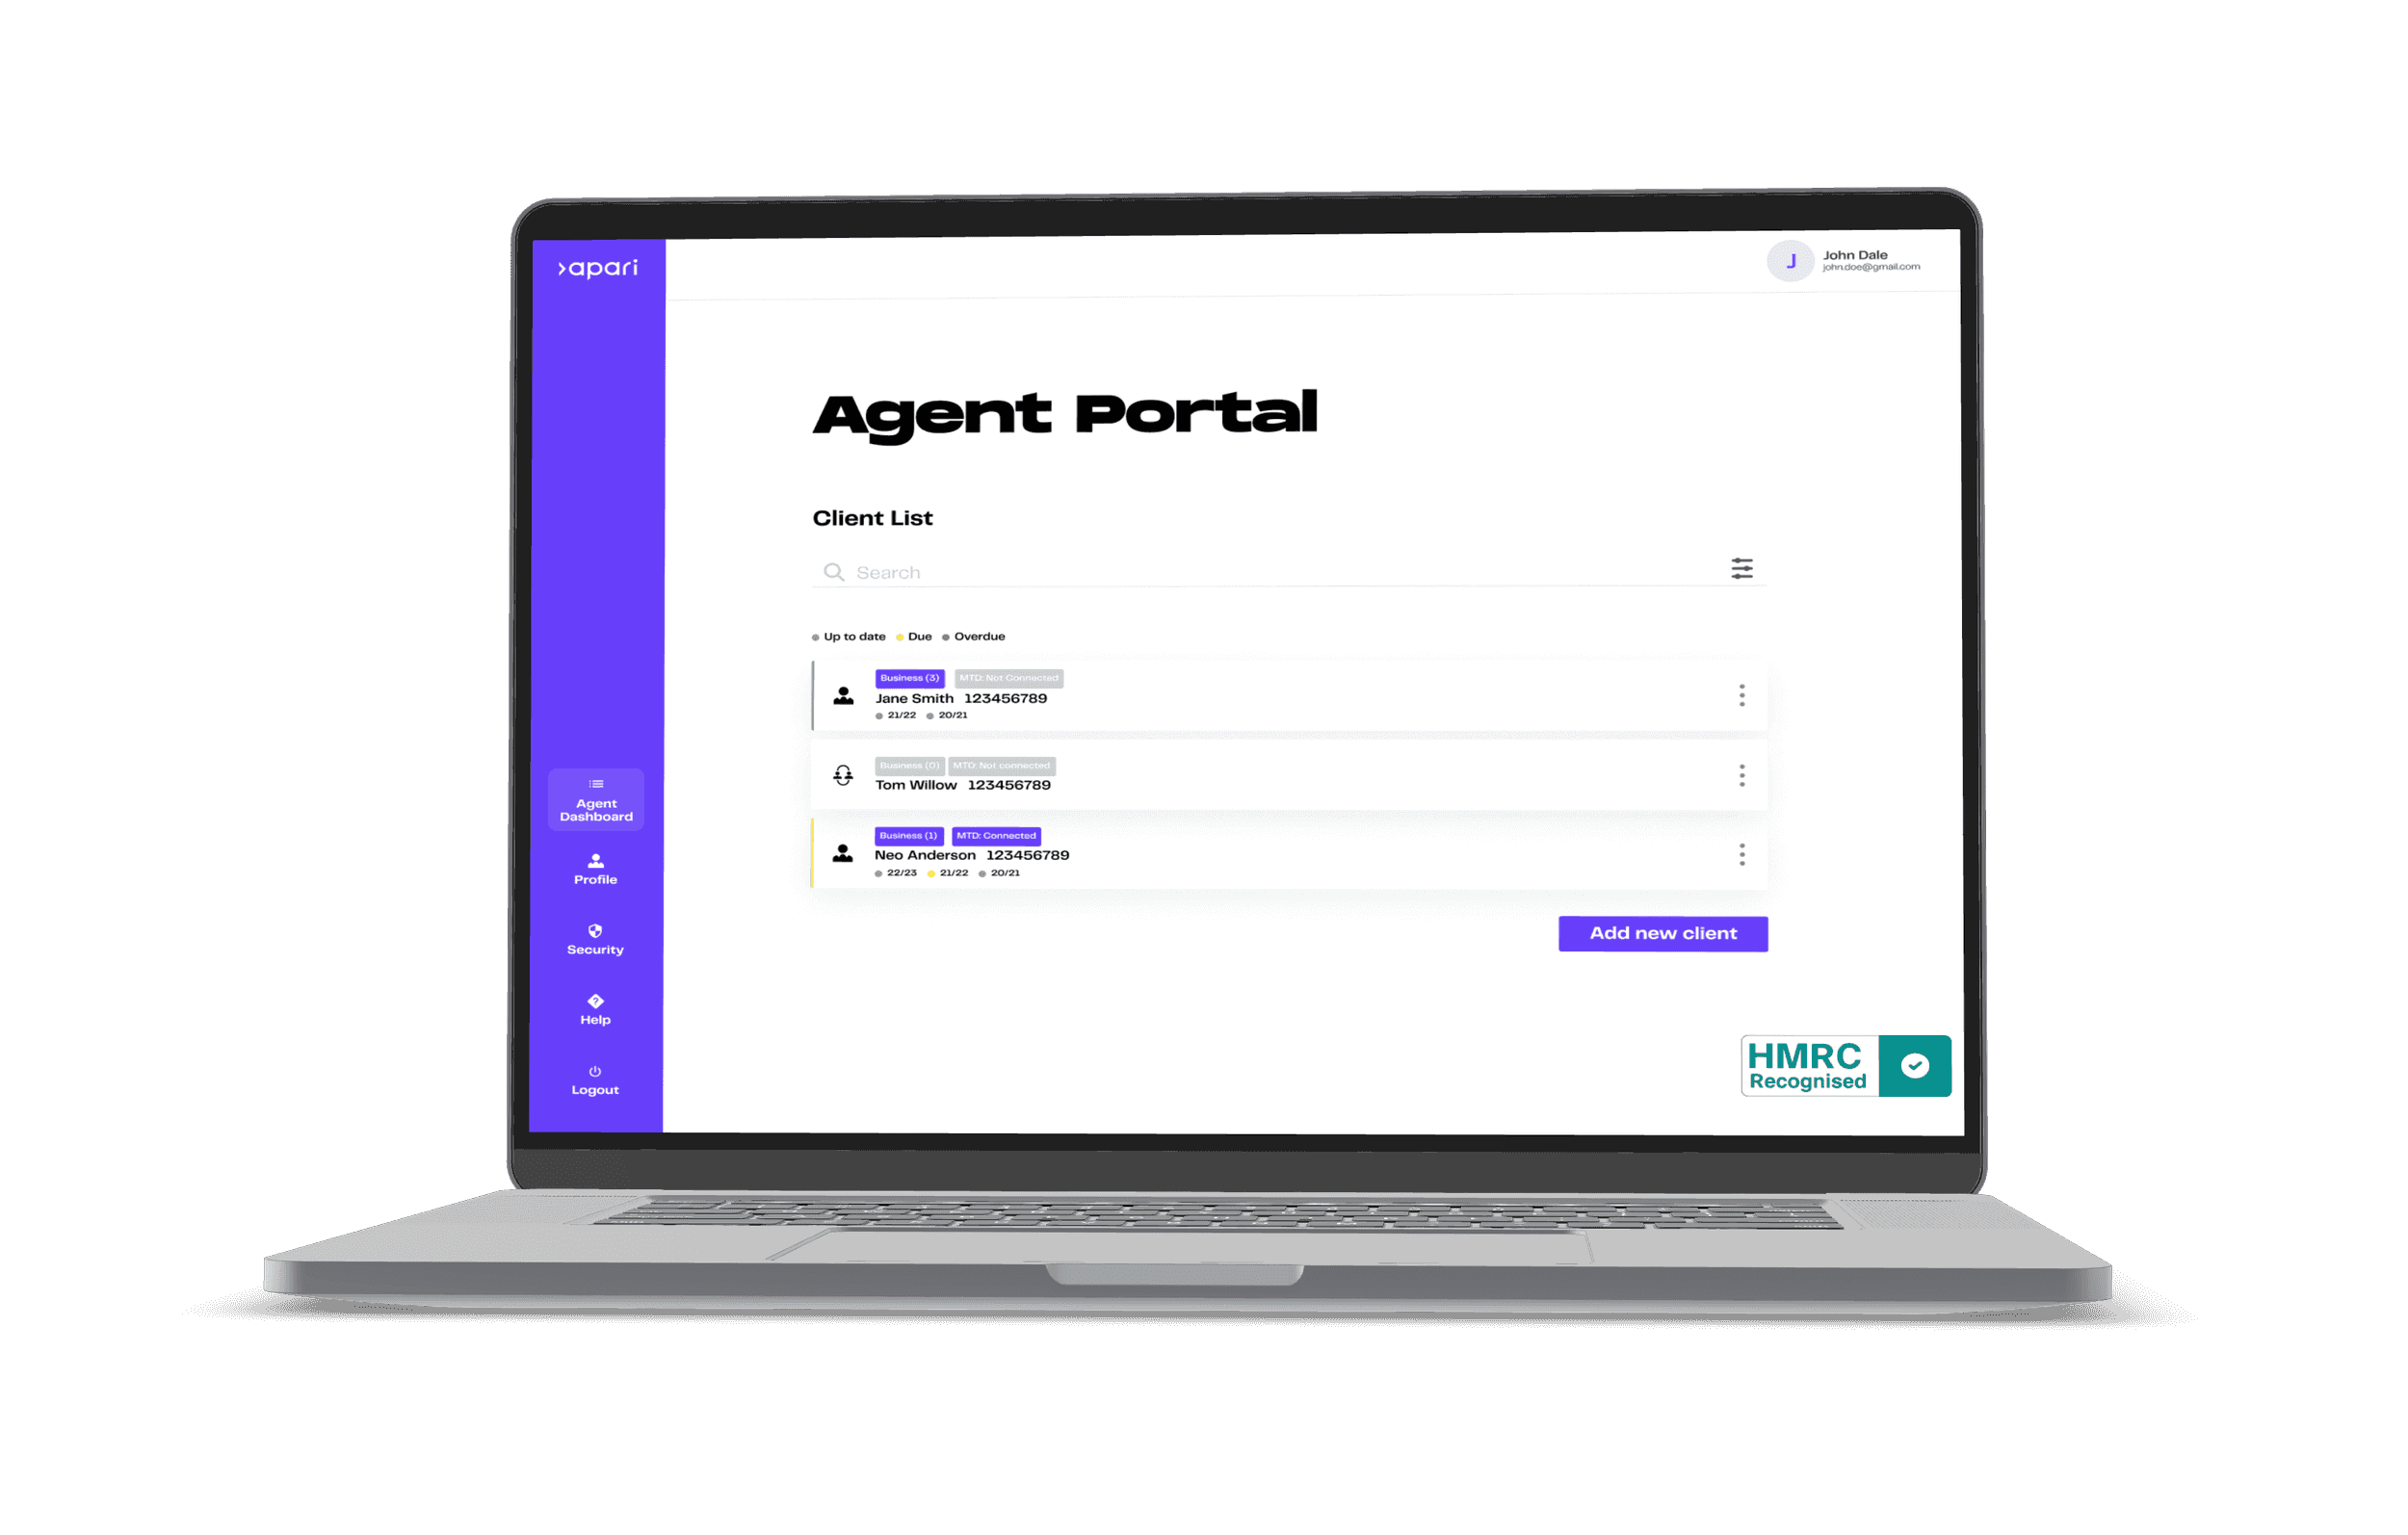 Agency portal image